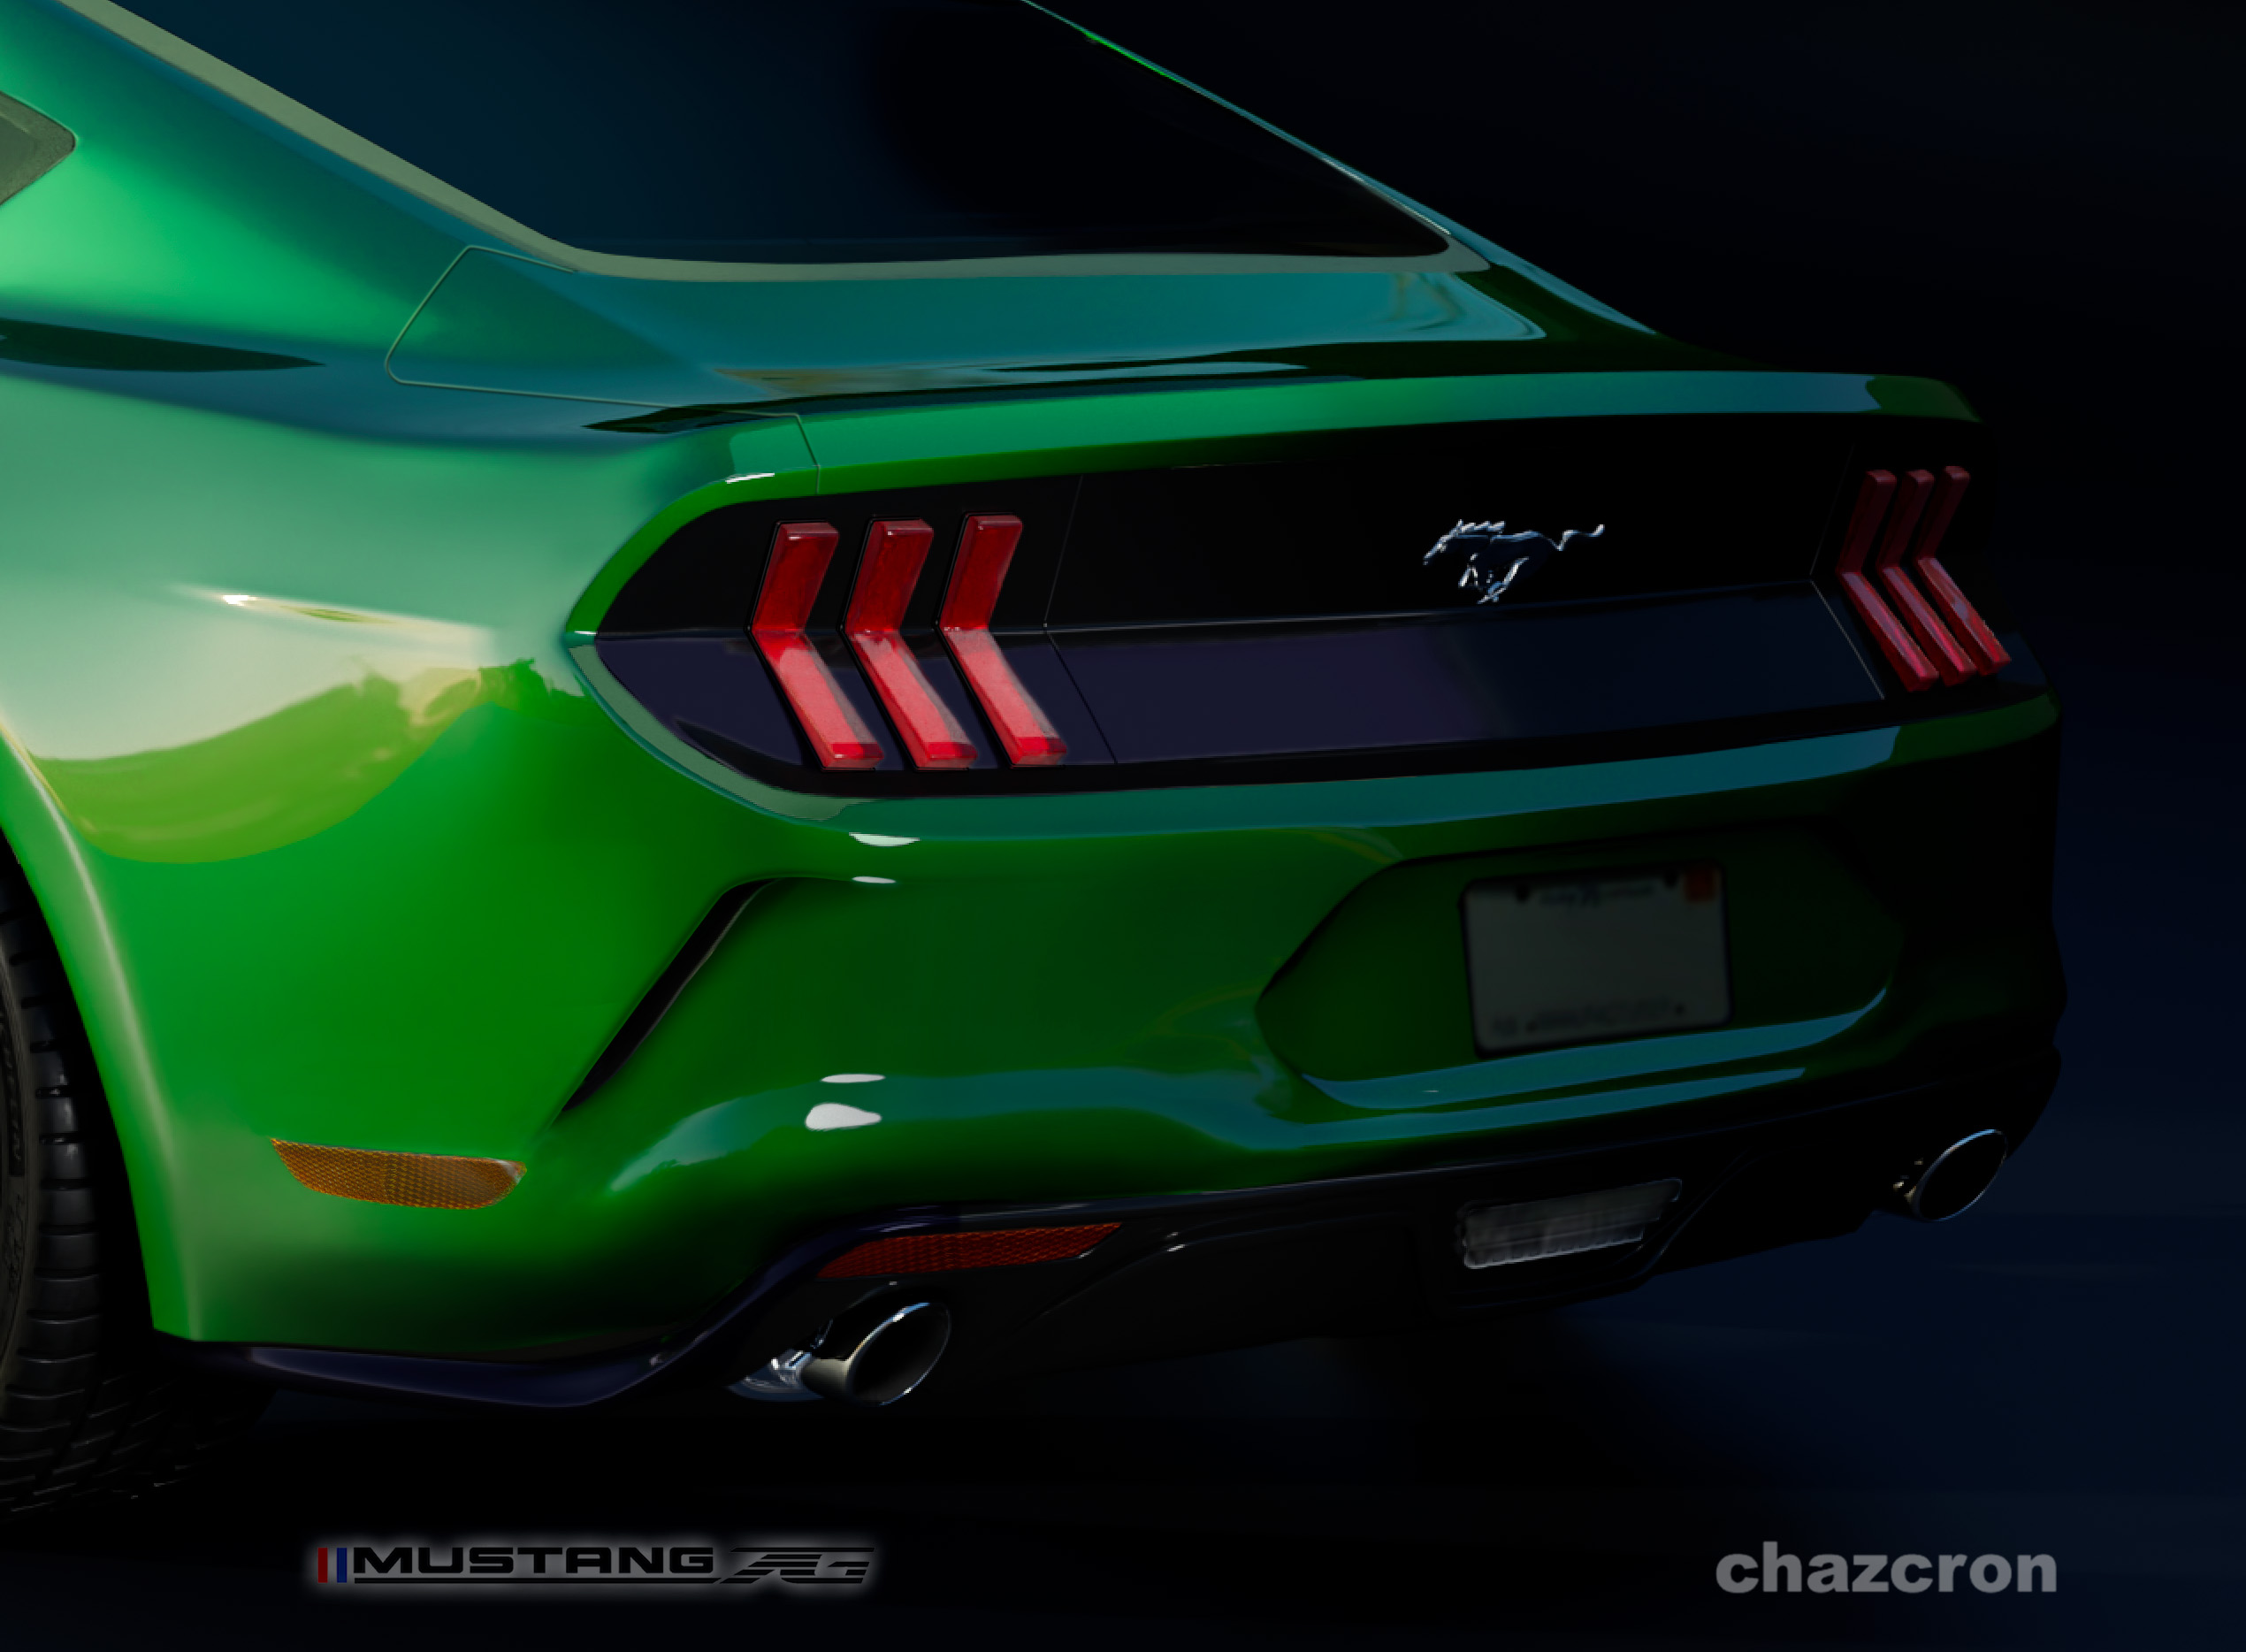 S650 Mustang chazcron weighs in... 7th gen 2023 Mustang S650 3D model & renderings in several colors! RearVIew